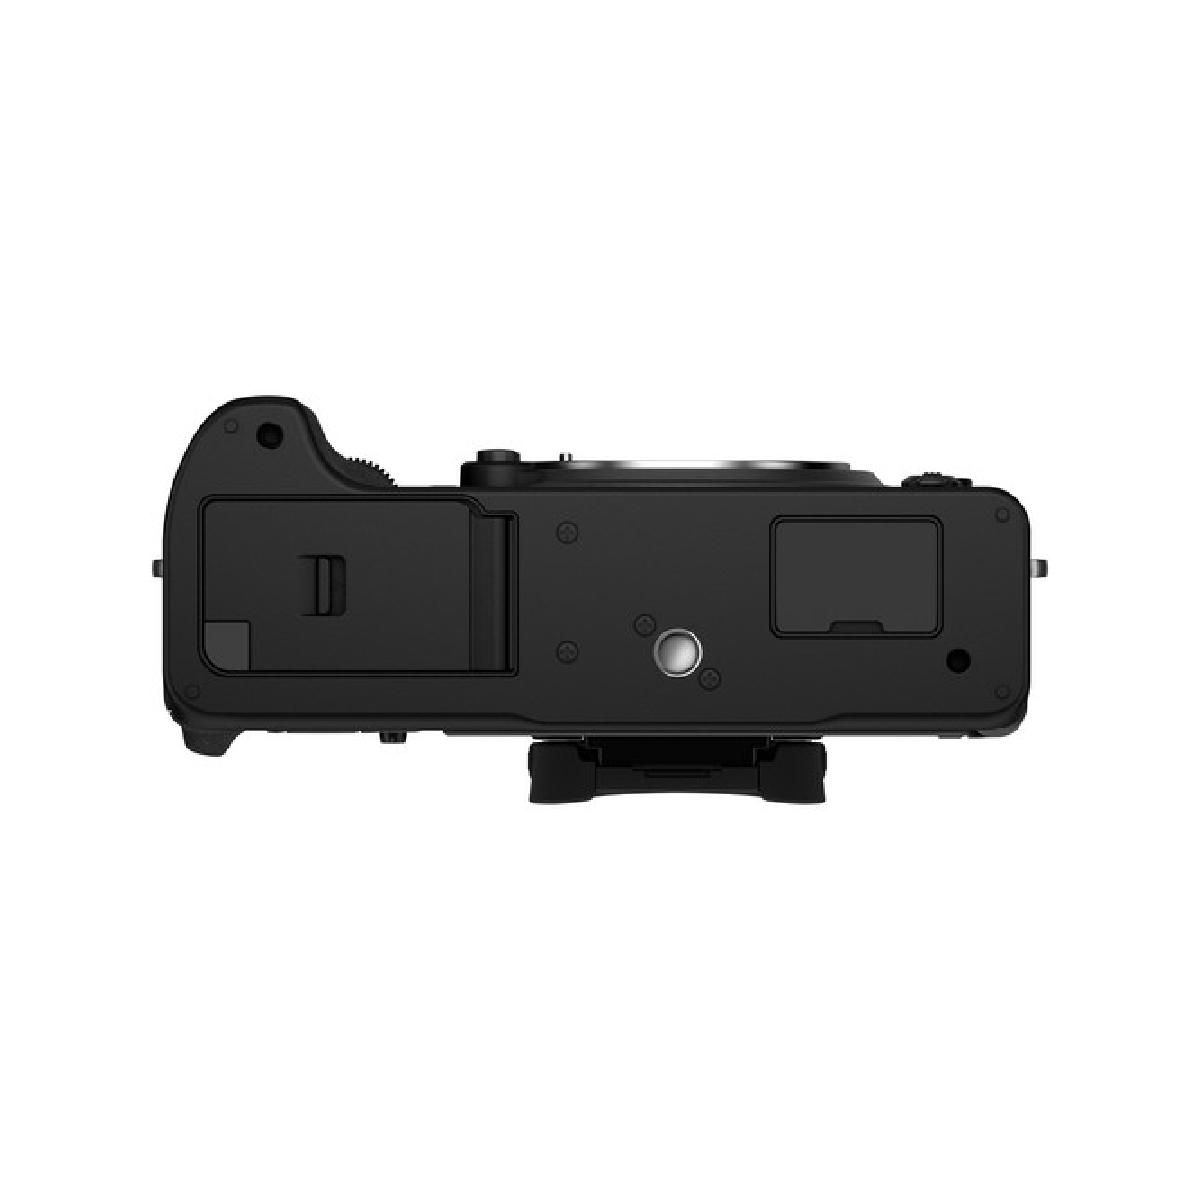 Fujifilm X-T4 26 MP Mirrorless Camera Body – Black (6)